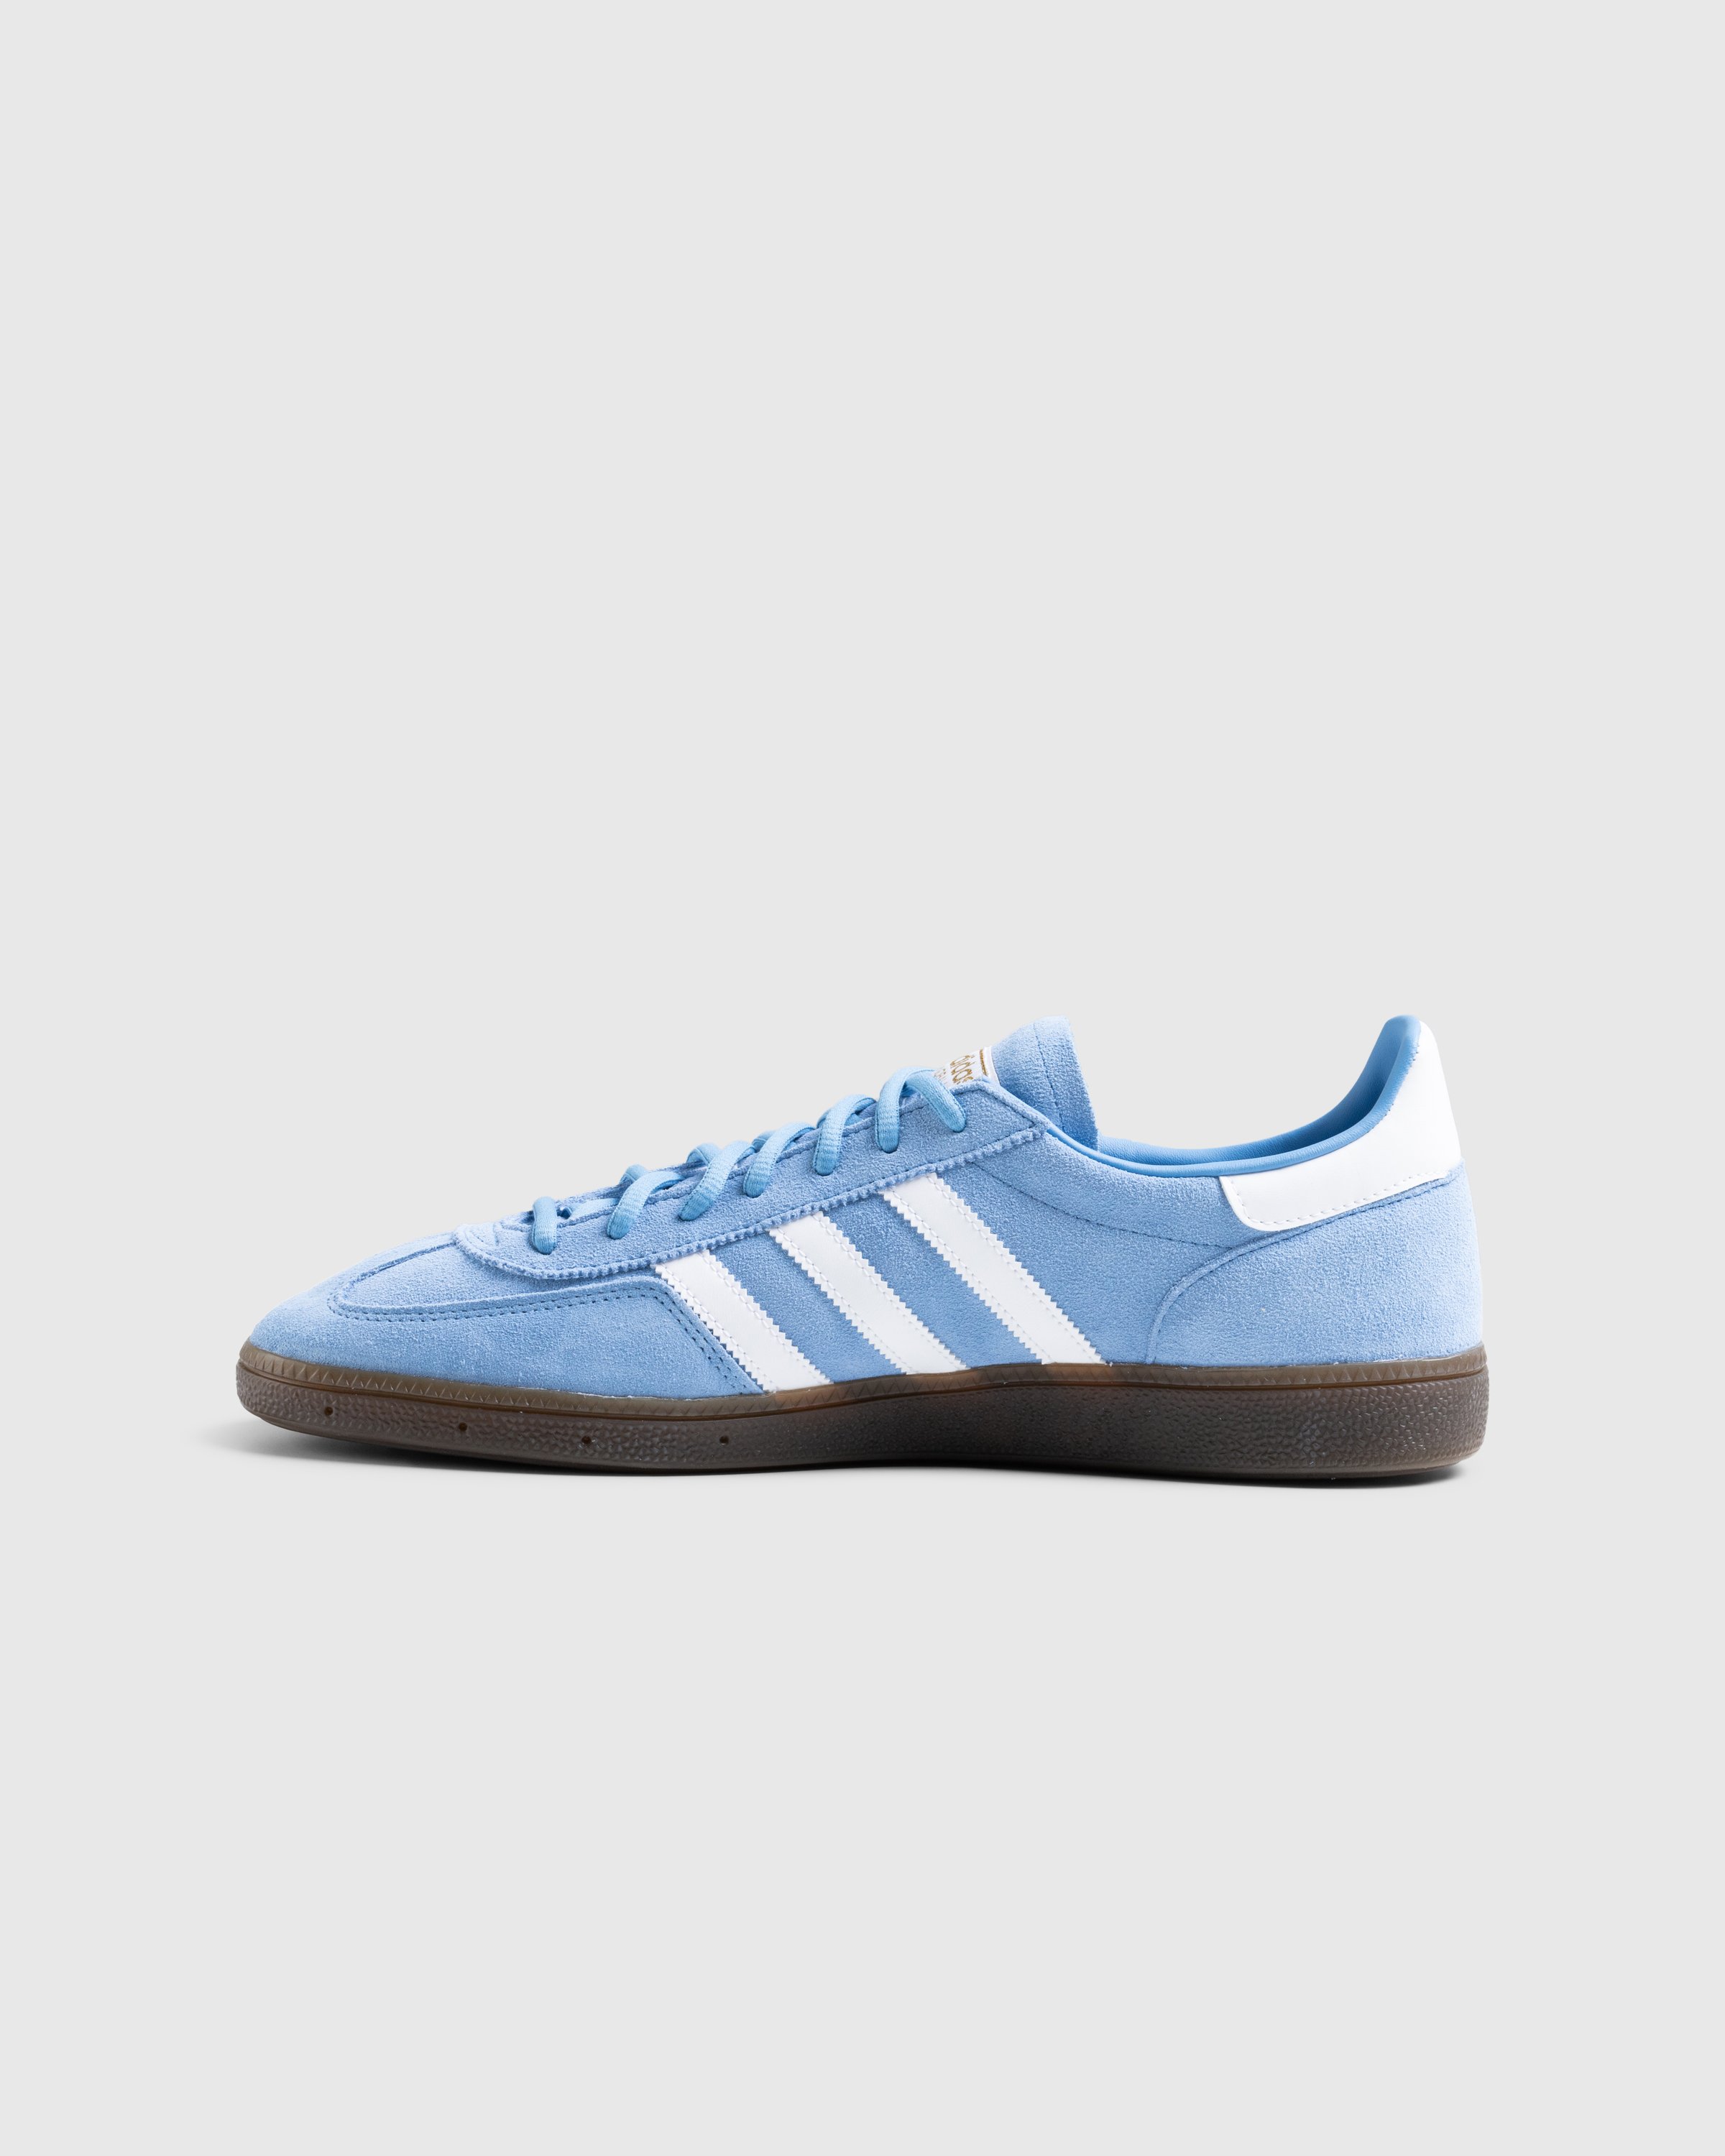 Adidas – Handball Spezial Light Blue | Highsnobiety Shop